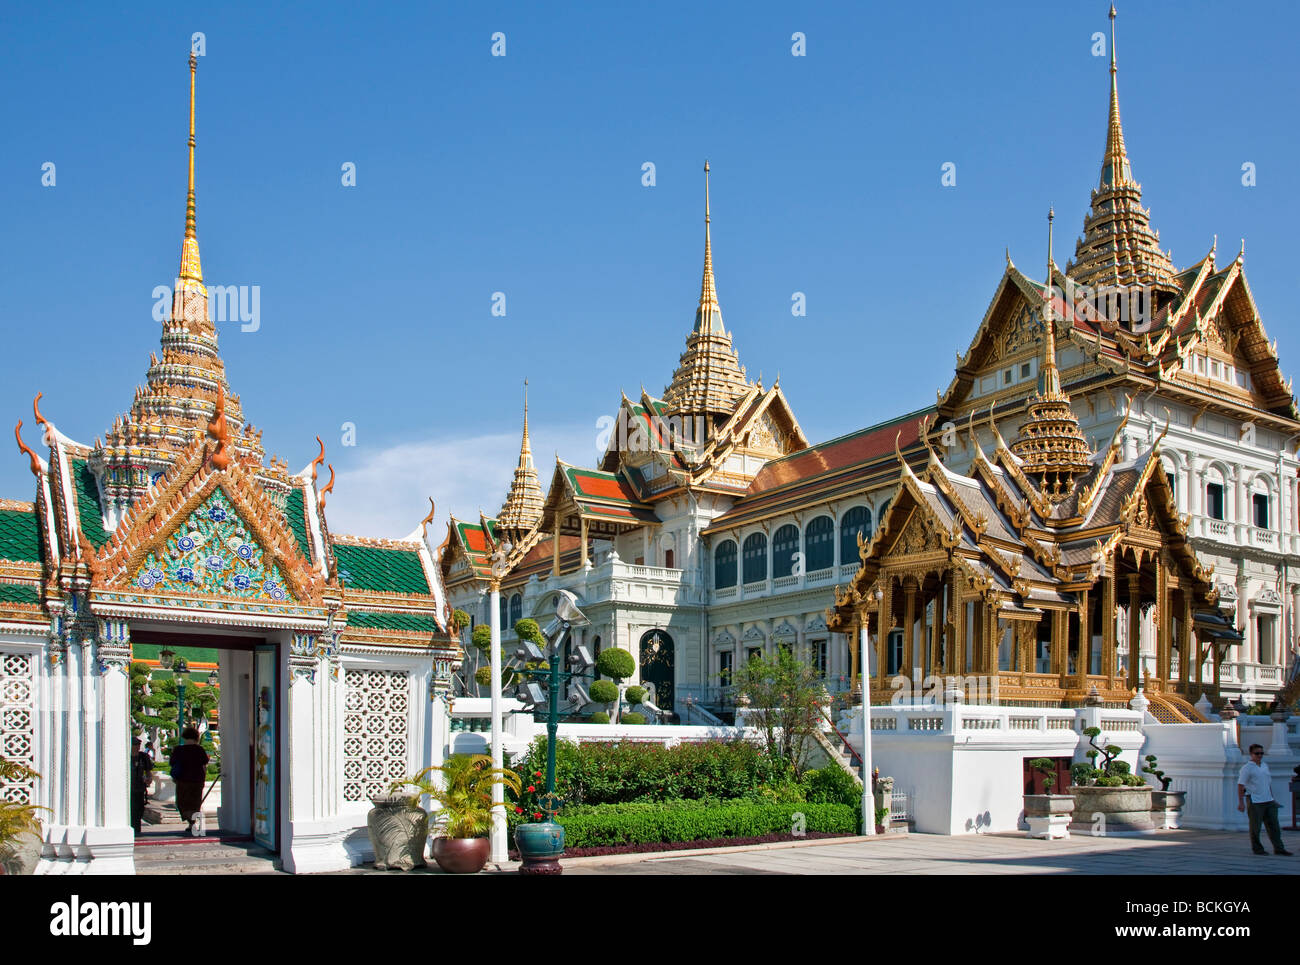 Thailand, Bangkok. The Dusit Maha Prasat Throne Hall in the King of Thailand  s Royal Grand Palace complex in Bangkok. Stock Photo